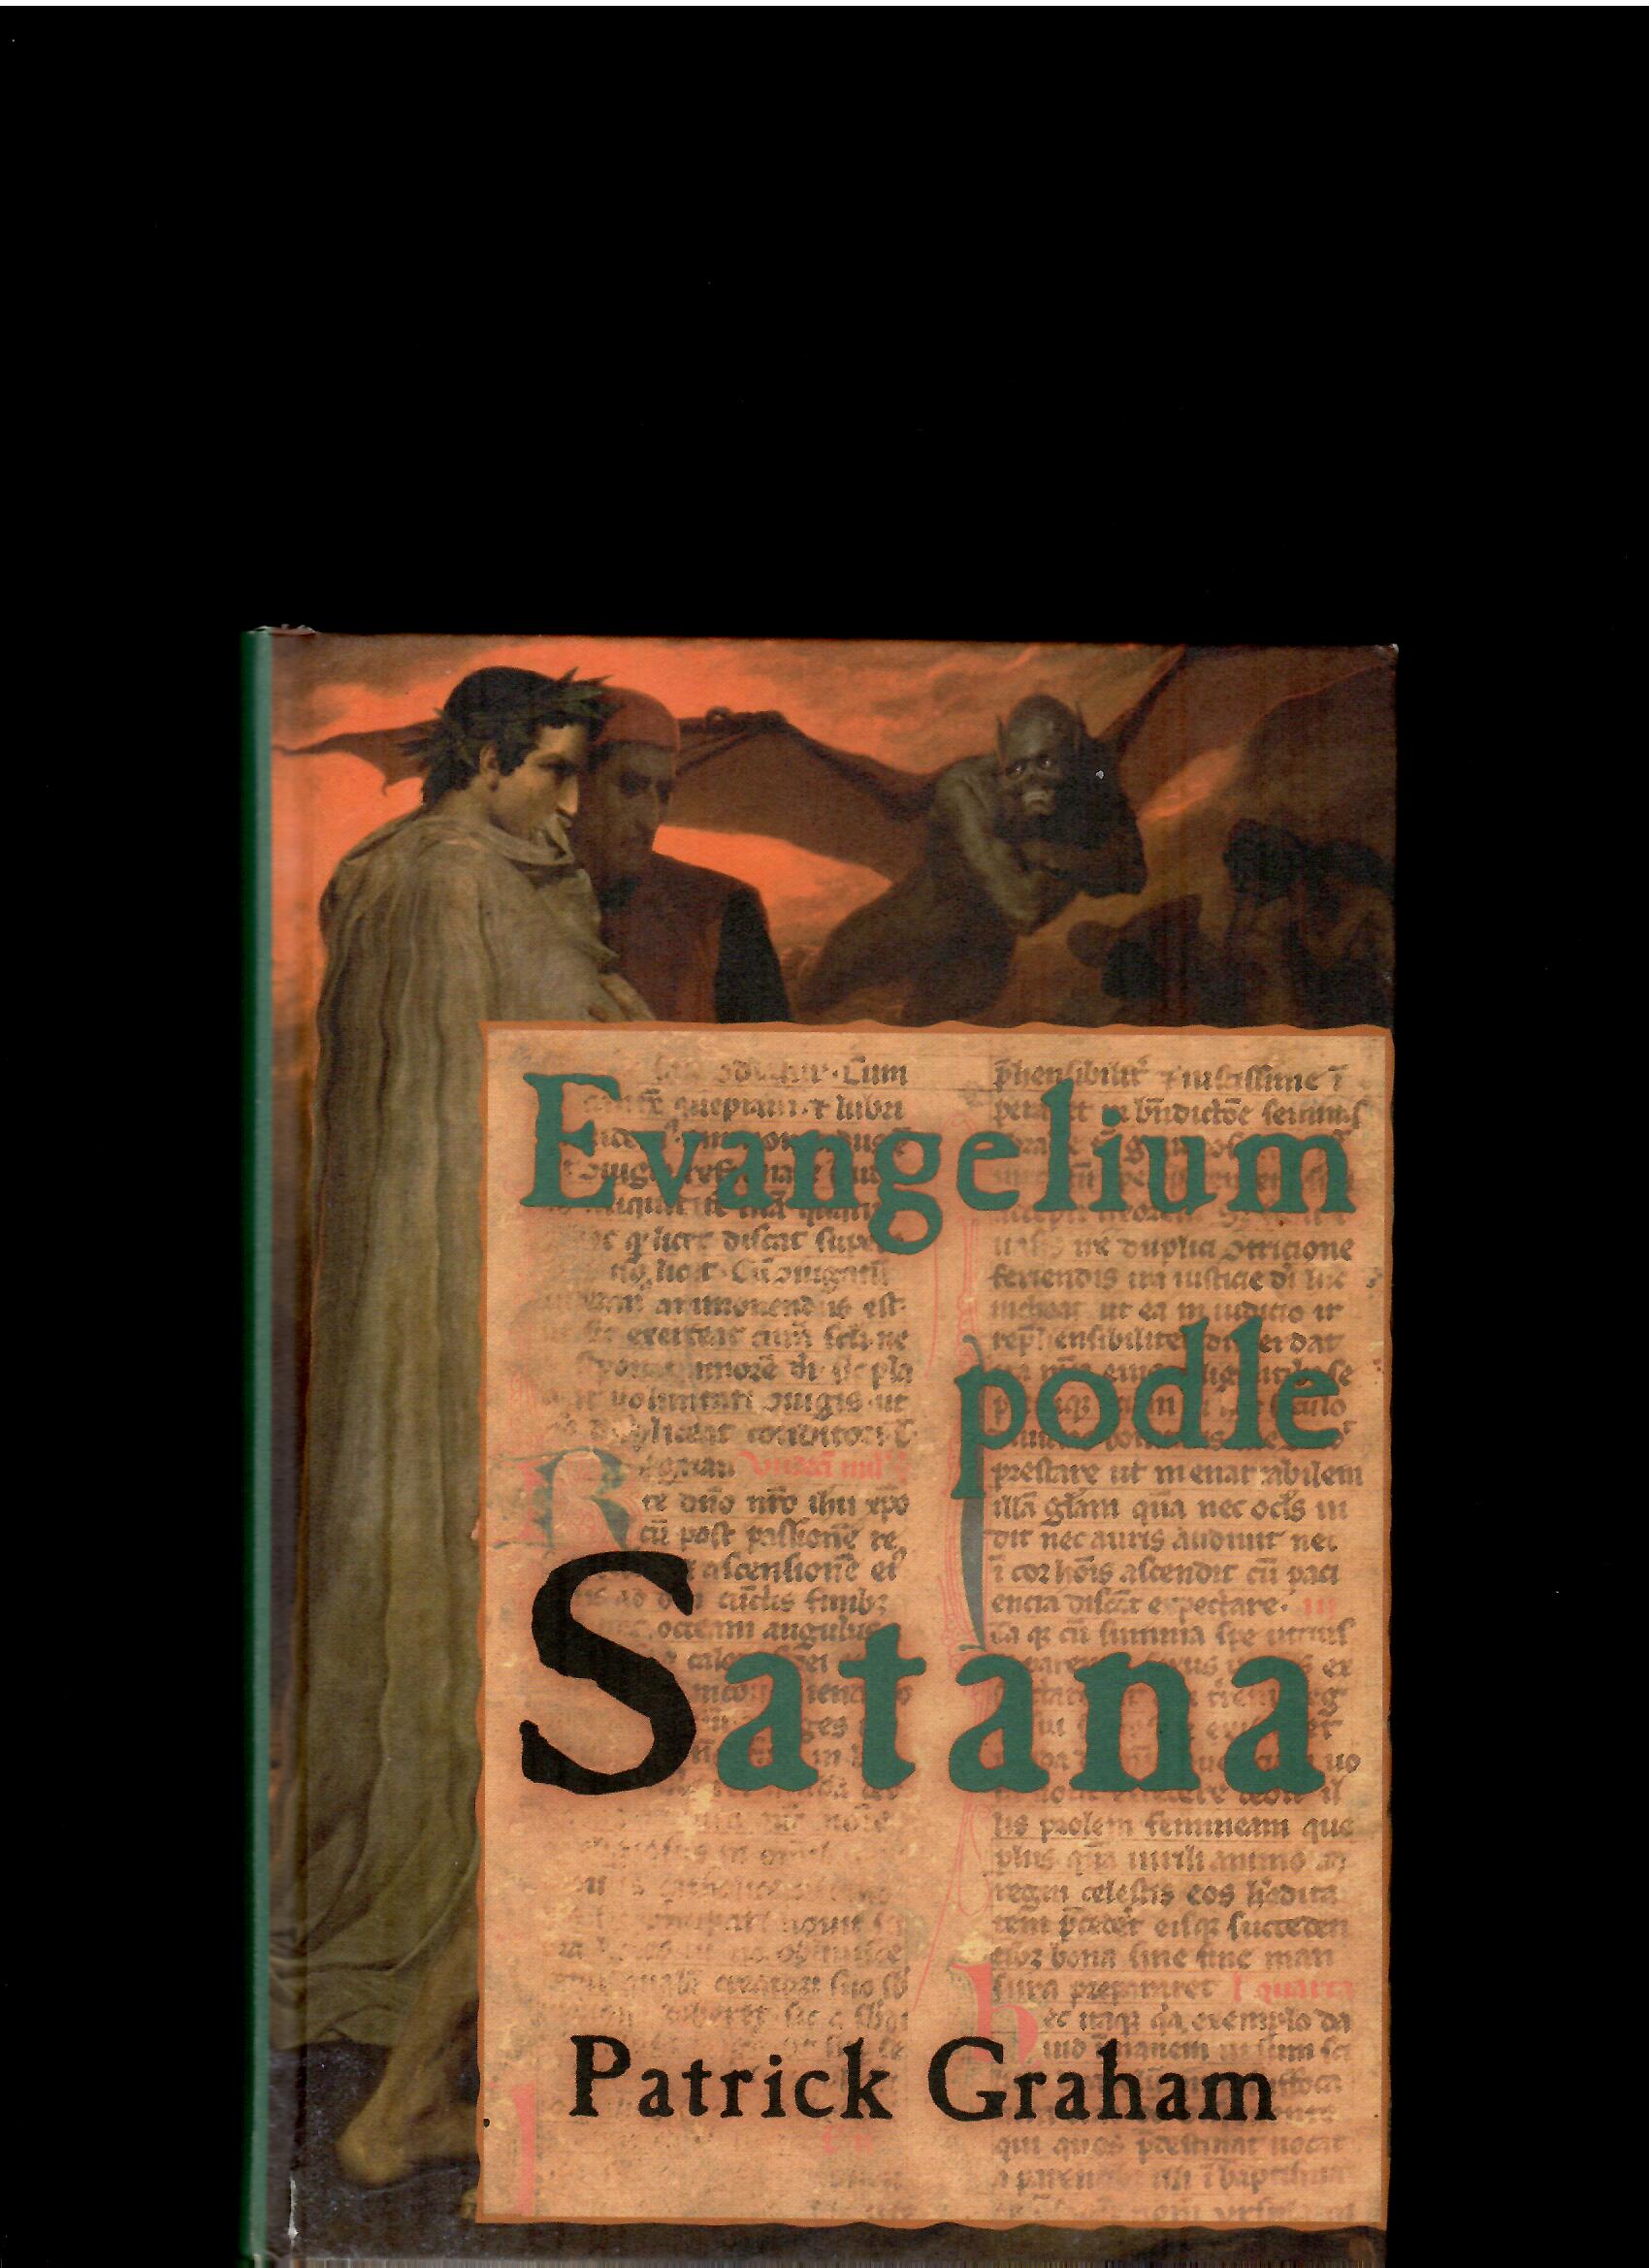 Patrick Graham: Evangelium podle Satana